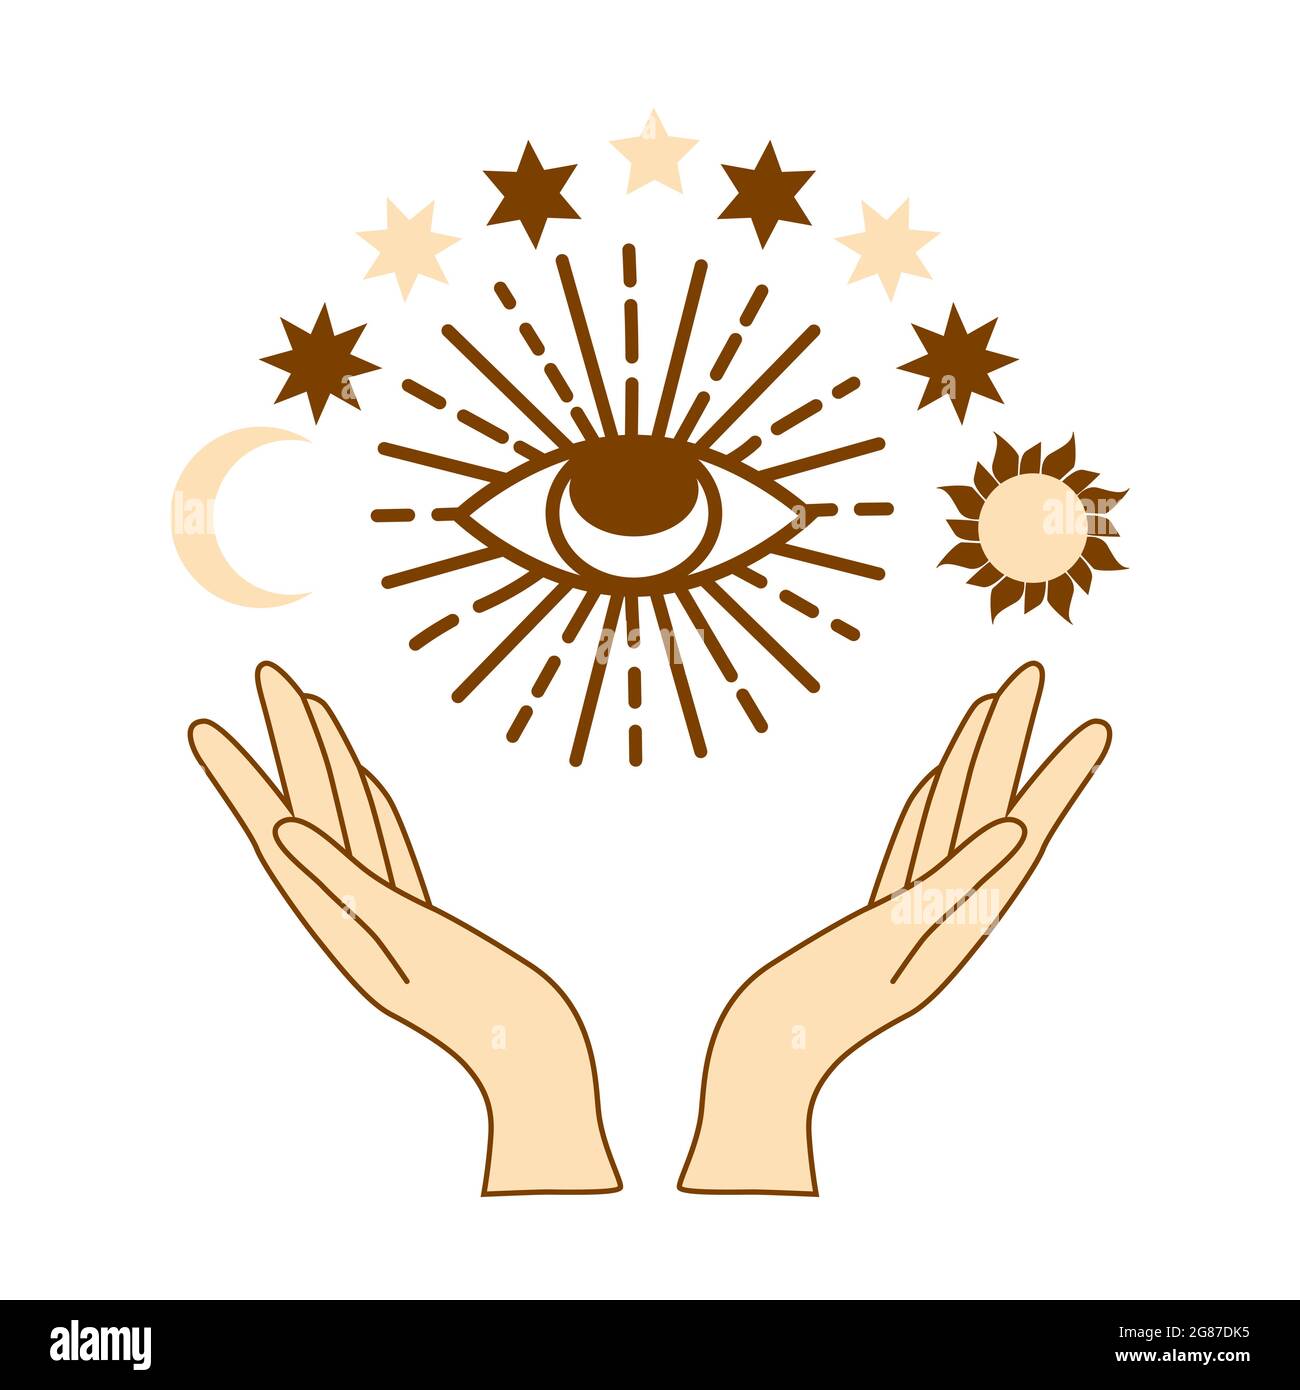 illustration of mystical goddess hands,evil eye, celestial symbols of moon phase. Esoteric, spiritual, wicca occult inspired concept. trendy beige Stock Vector